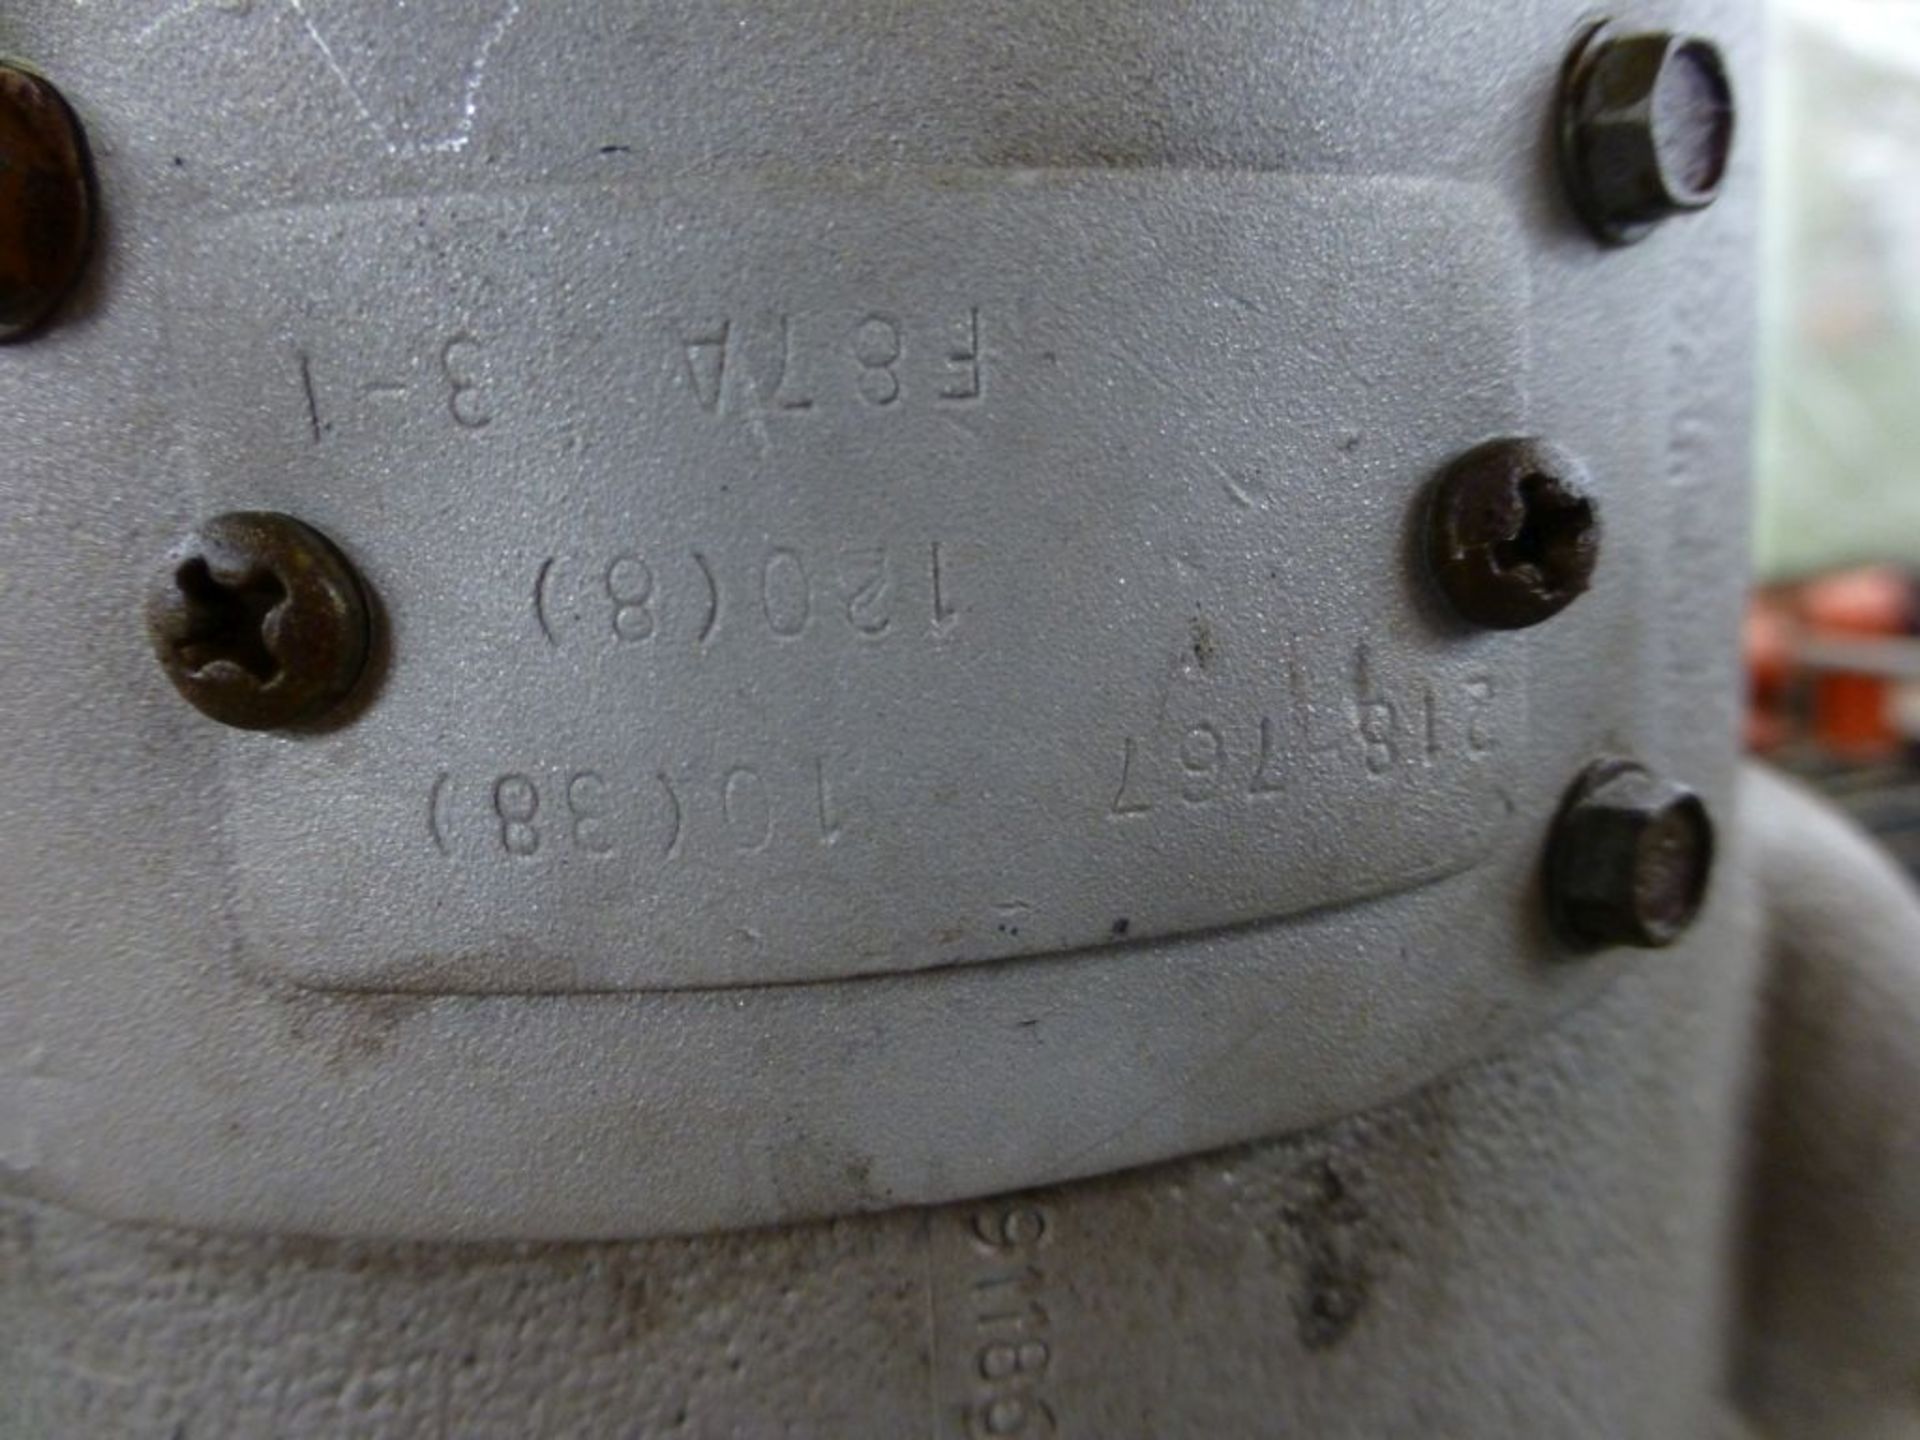 Graco Air Powered Pump|Model No. 218-767; 120 PSI - Image 5 of 5